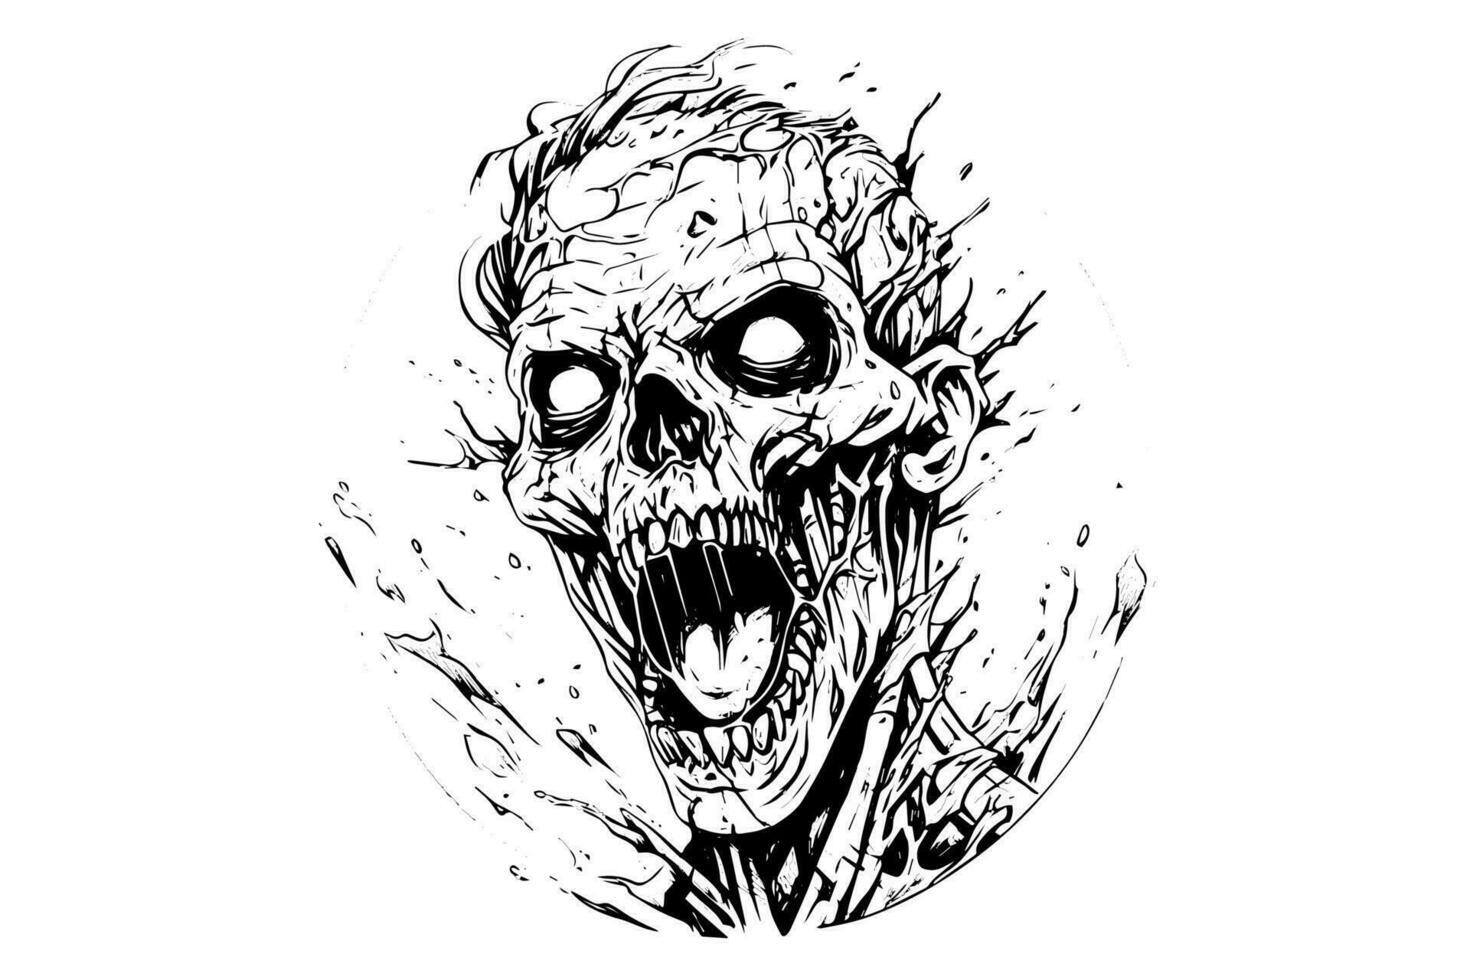 zombi cabeza o cara tinta bosquejo. caminando muerto mano dibujo vector ilustración.